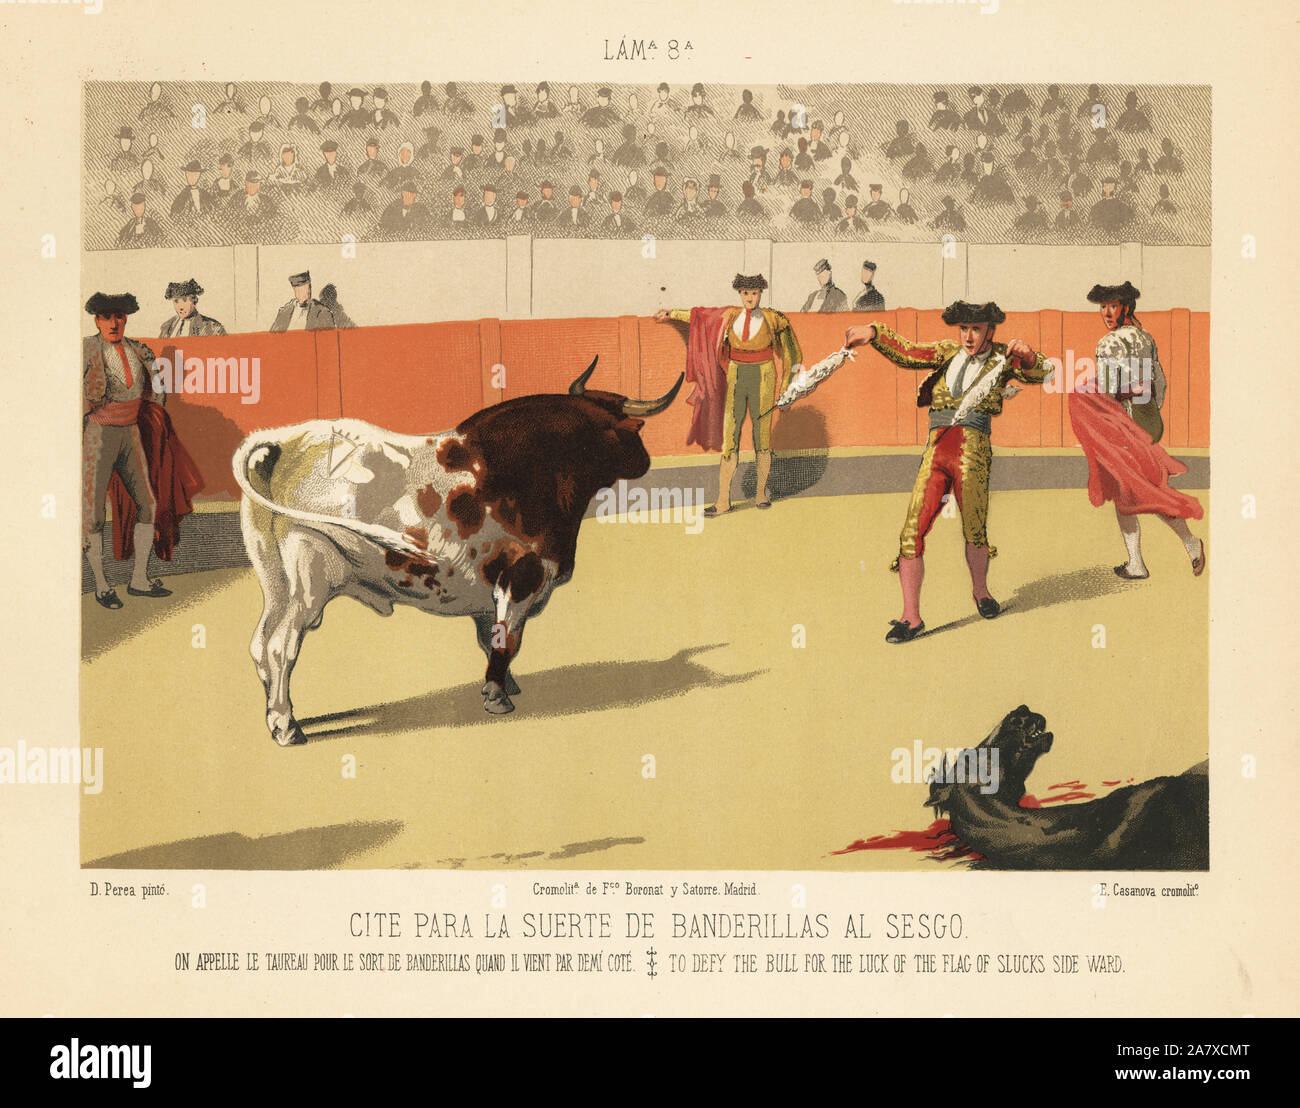 Matador prépare à poignarder un taureau avec deux banderilles dans les arènes. Chromolithographie par E. Casanova après une illustration de Daniel Perea de corrida, Corrida del Toros, Madrid, Boronat & Satorre, 1894. Banque D'Images